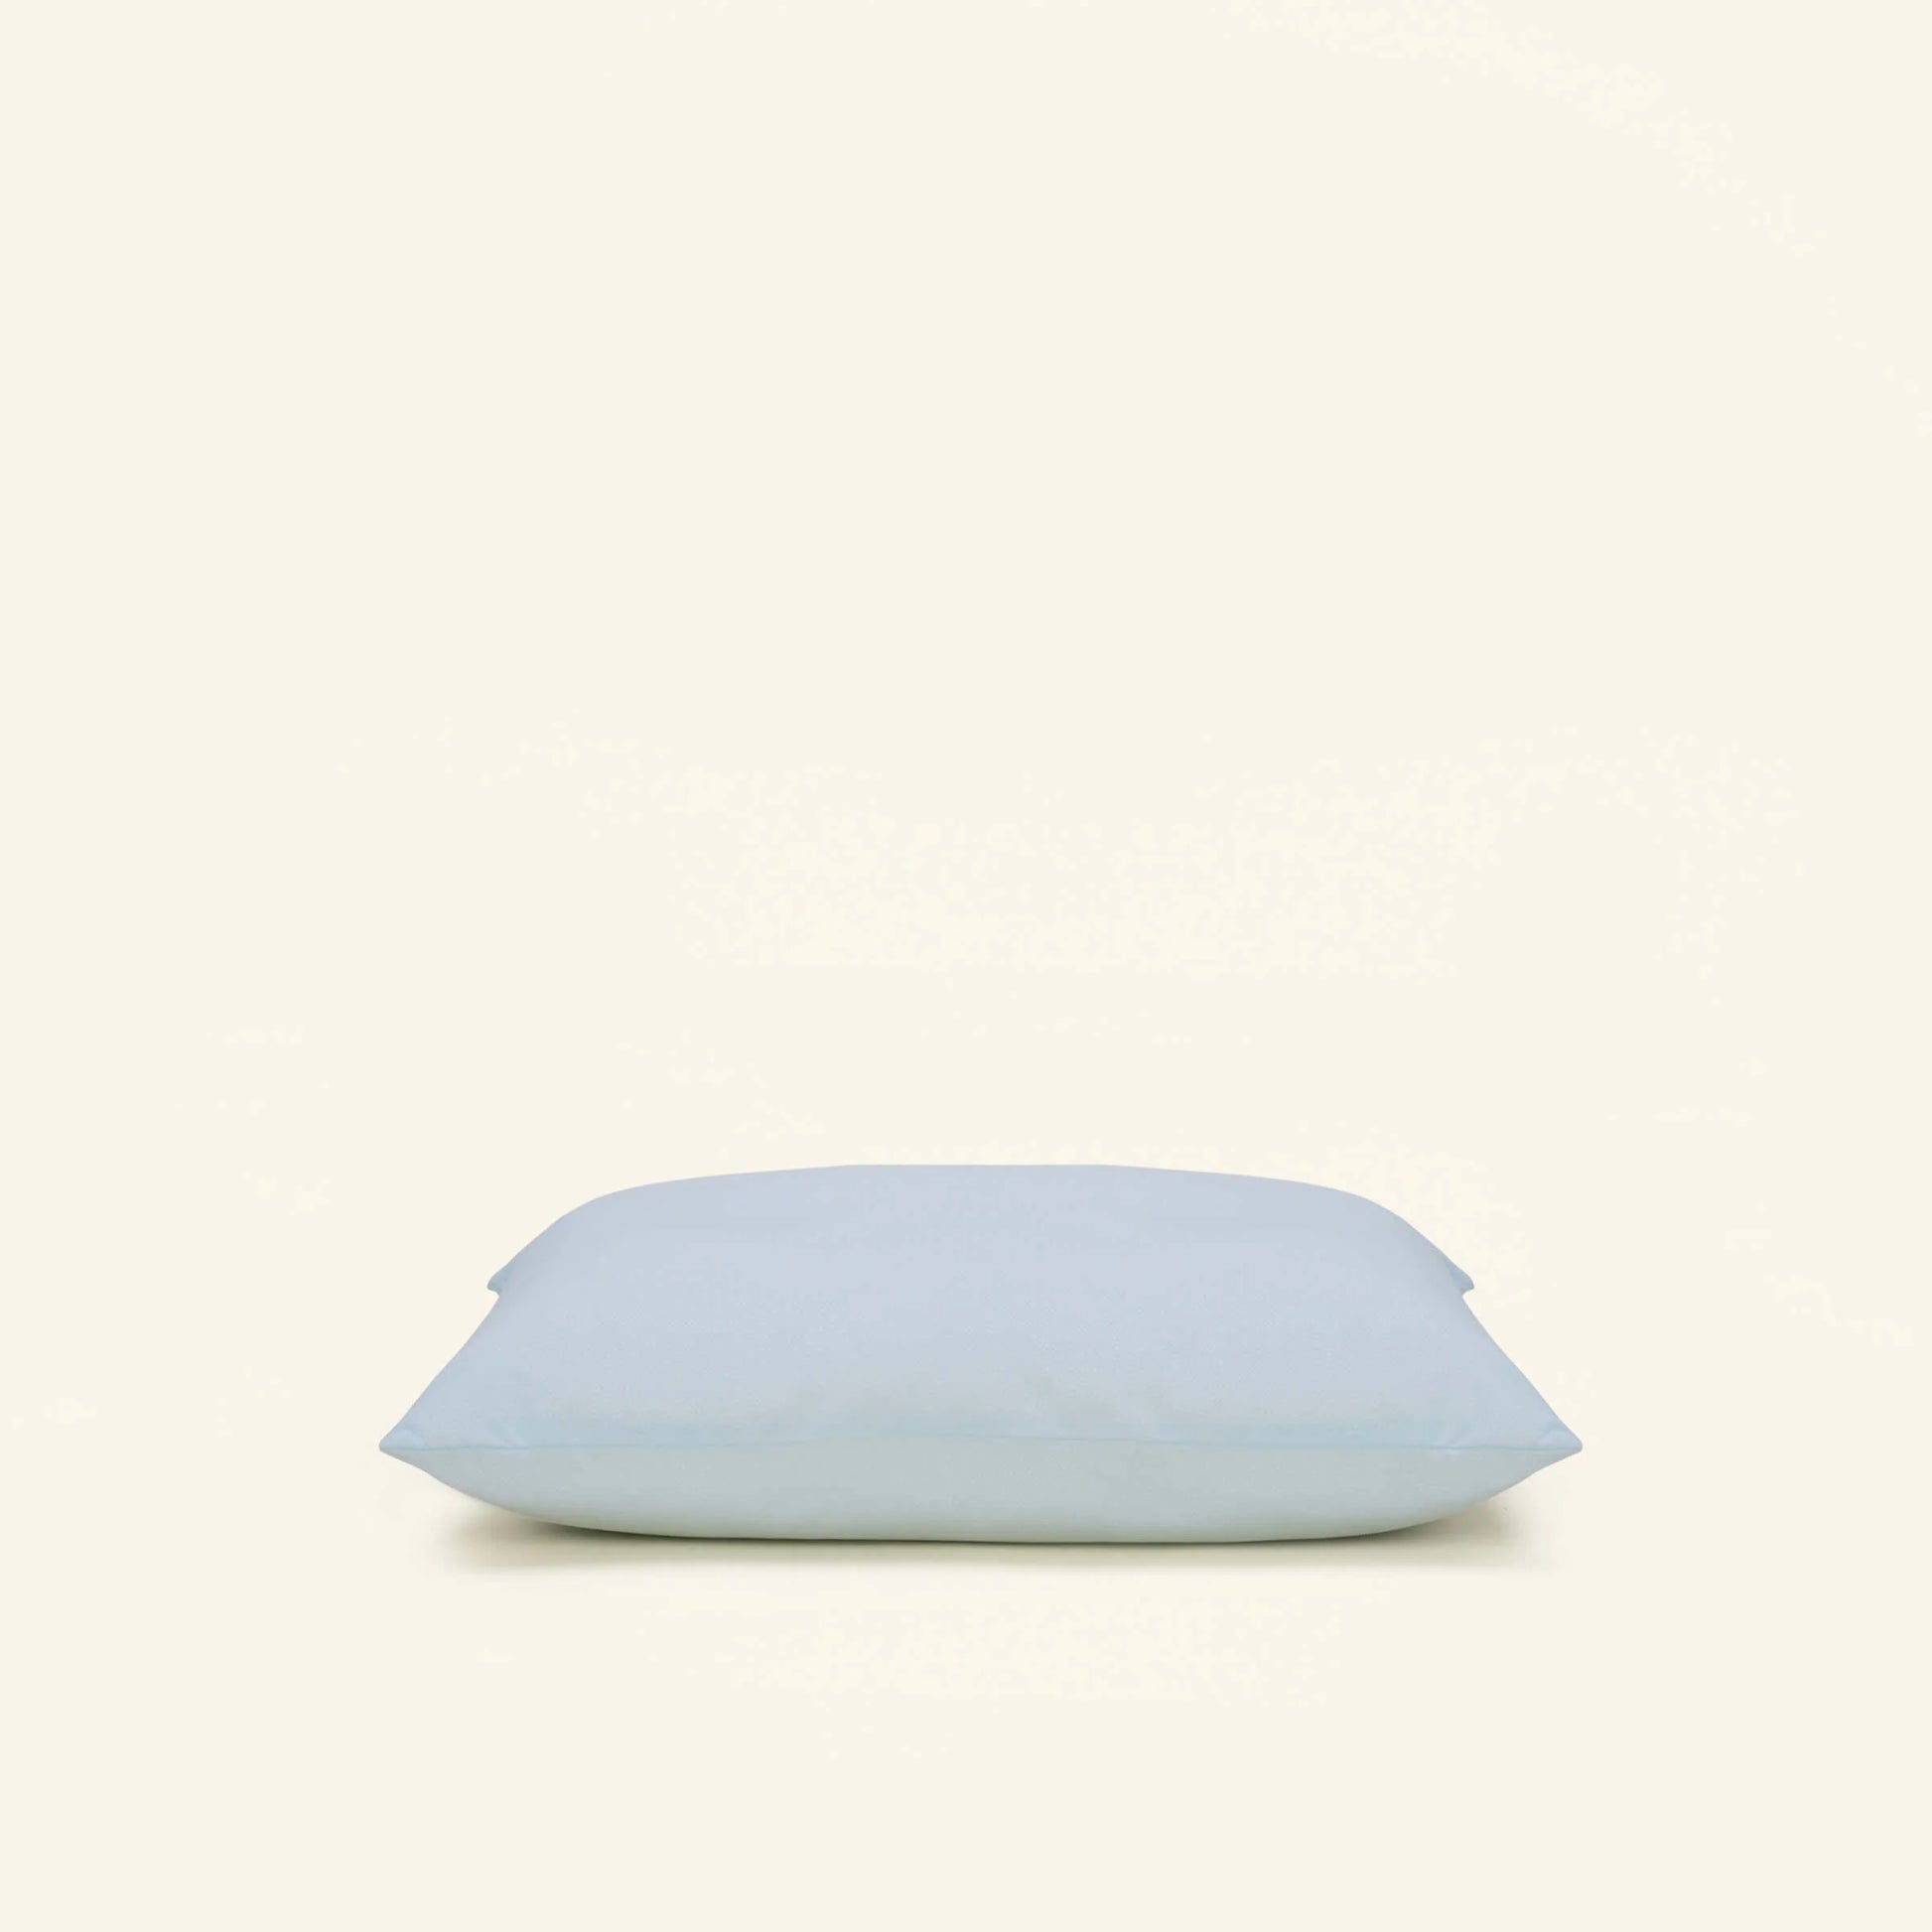 Slumberland Cool Comfort Microfibre Pillow